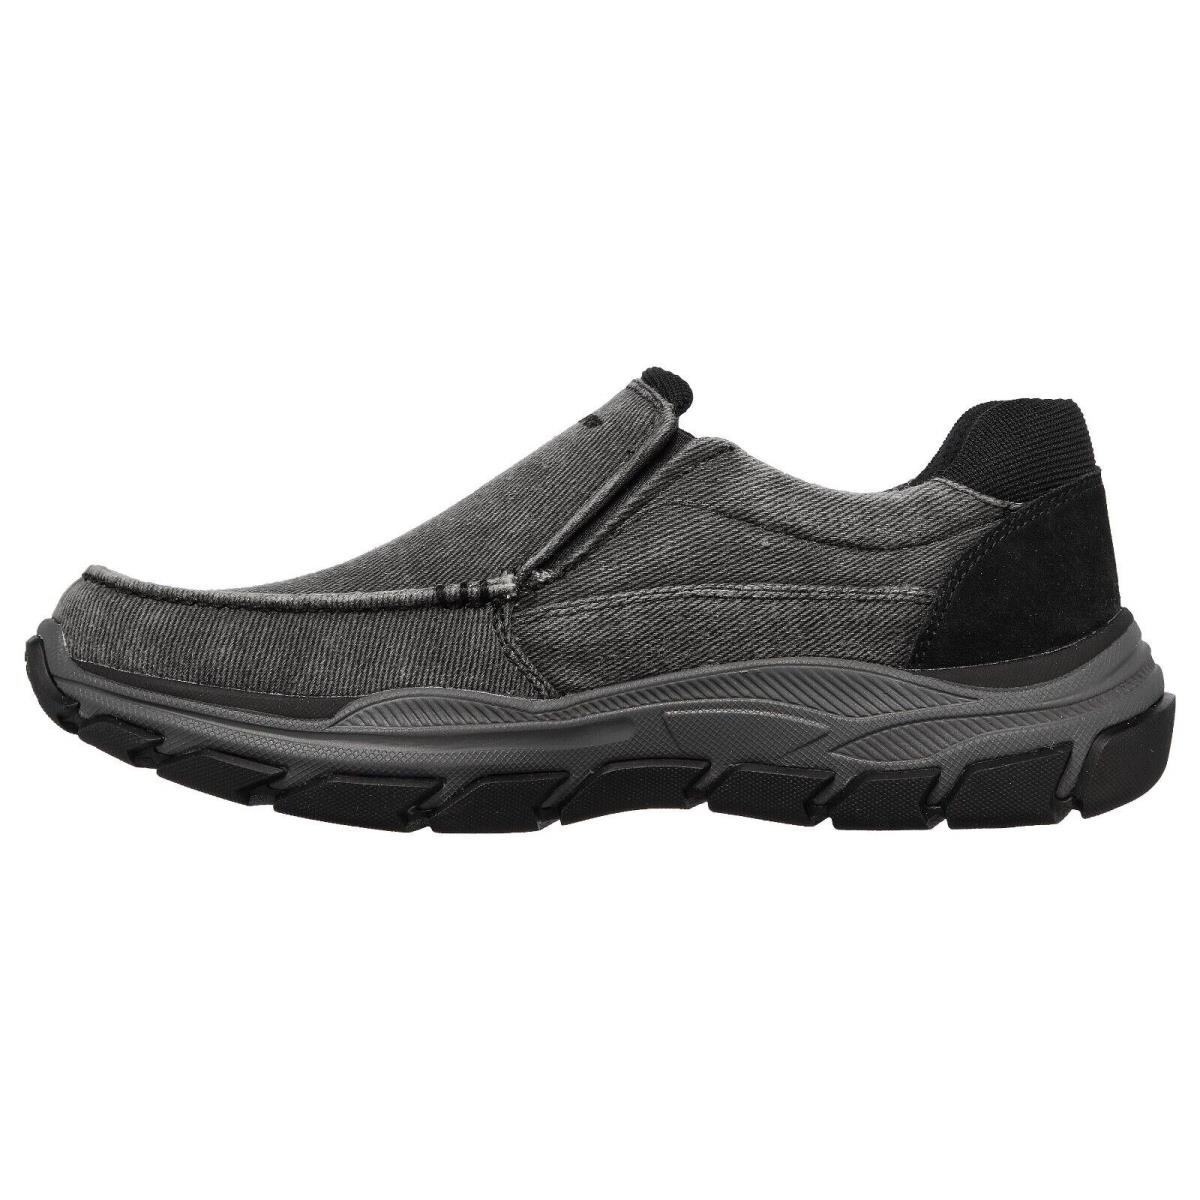 Skechers shoes Respected Vergo - Black 2